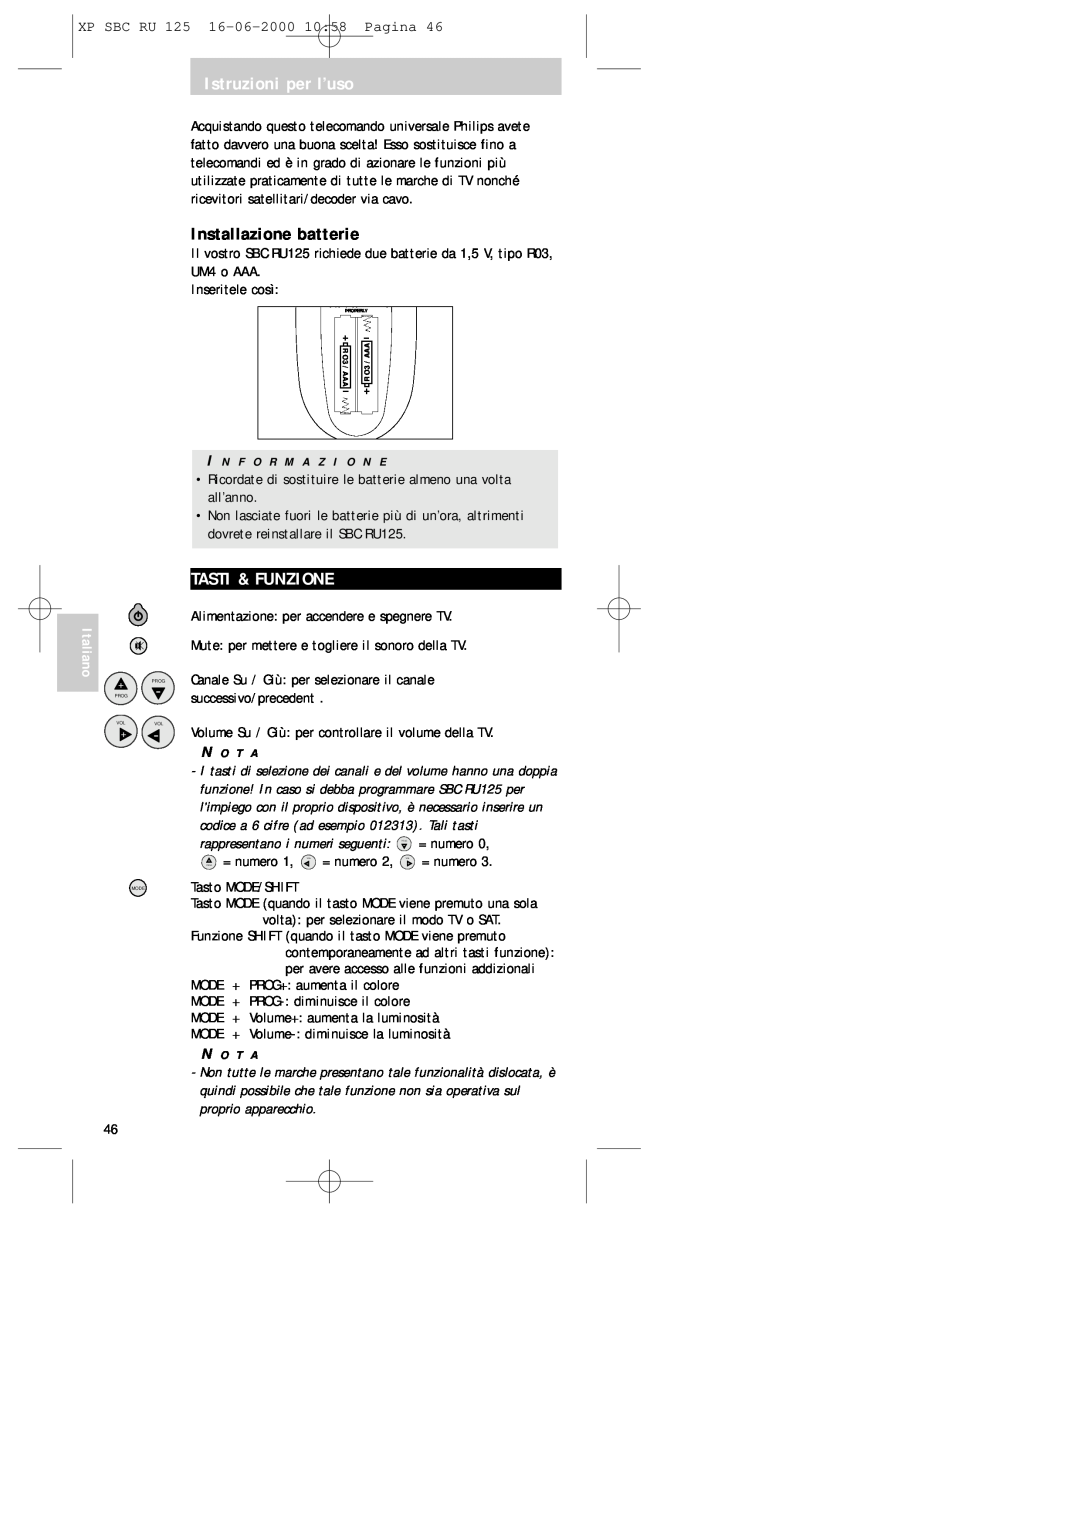 Philips RU125 manual Istruzioni per l’uso, Installazione batterie, Tasti & Funzione 